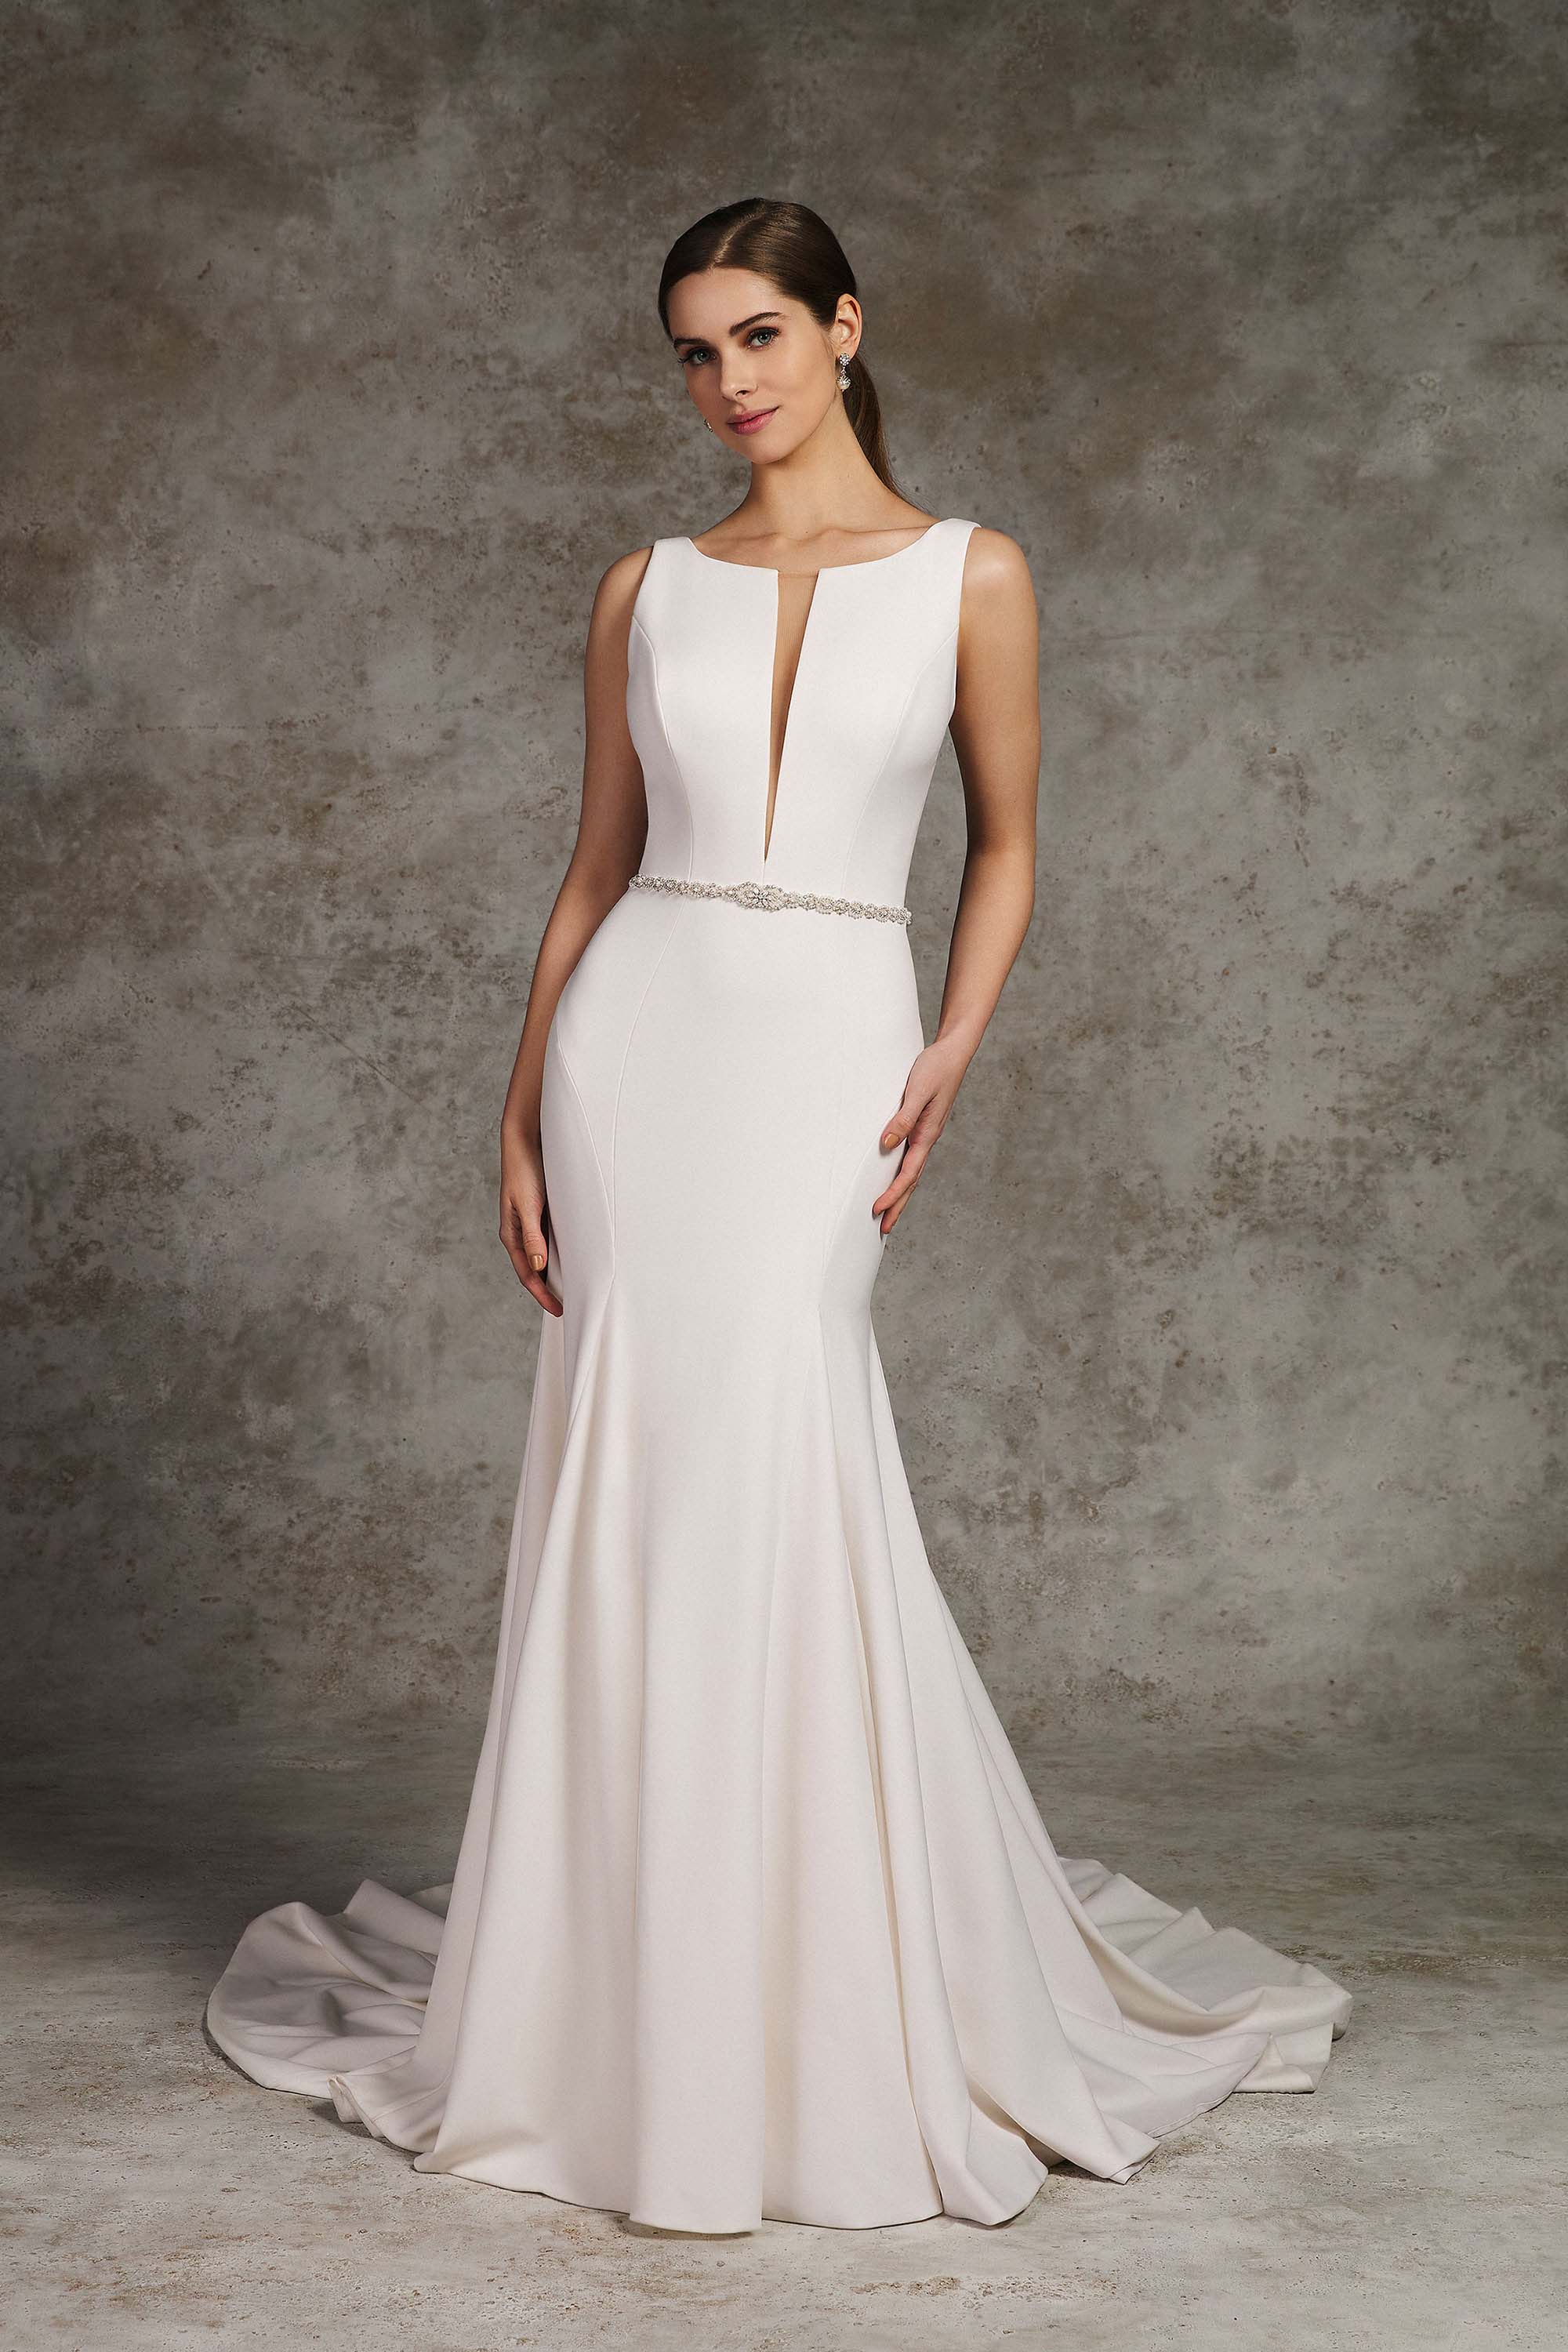 *NEW* Rings Designer Wedding Gown - #55055